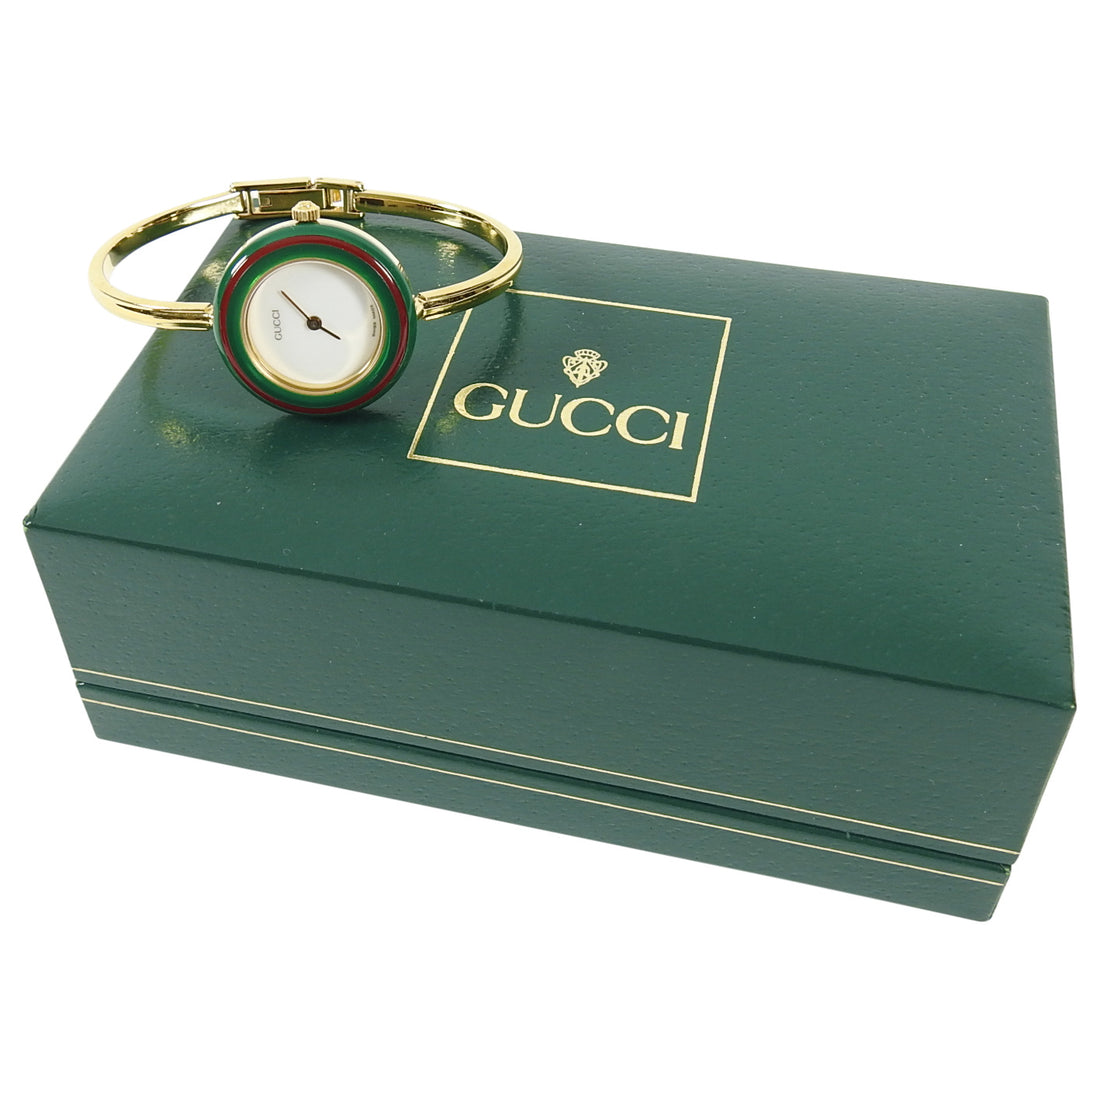 Gucci 1980’s Vintage Interchangeable Bezel Bracelet Watch